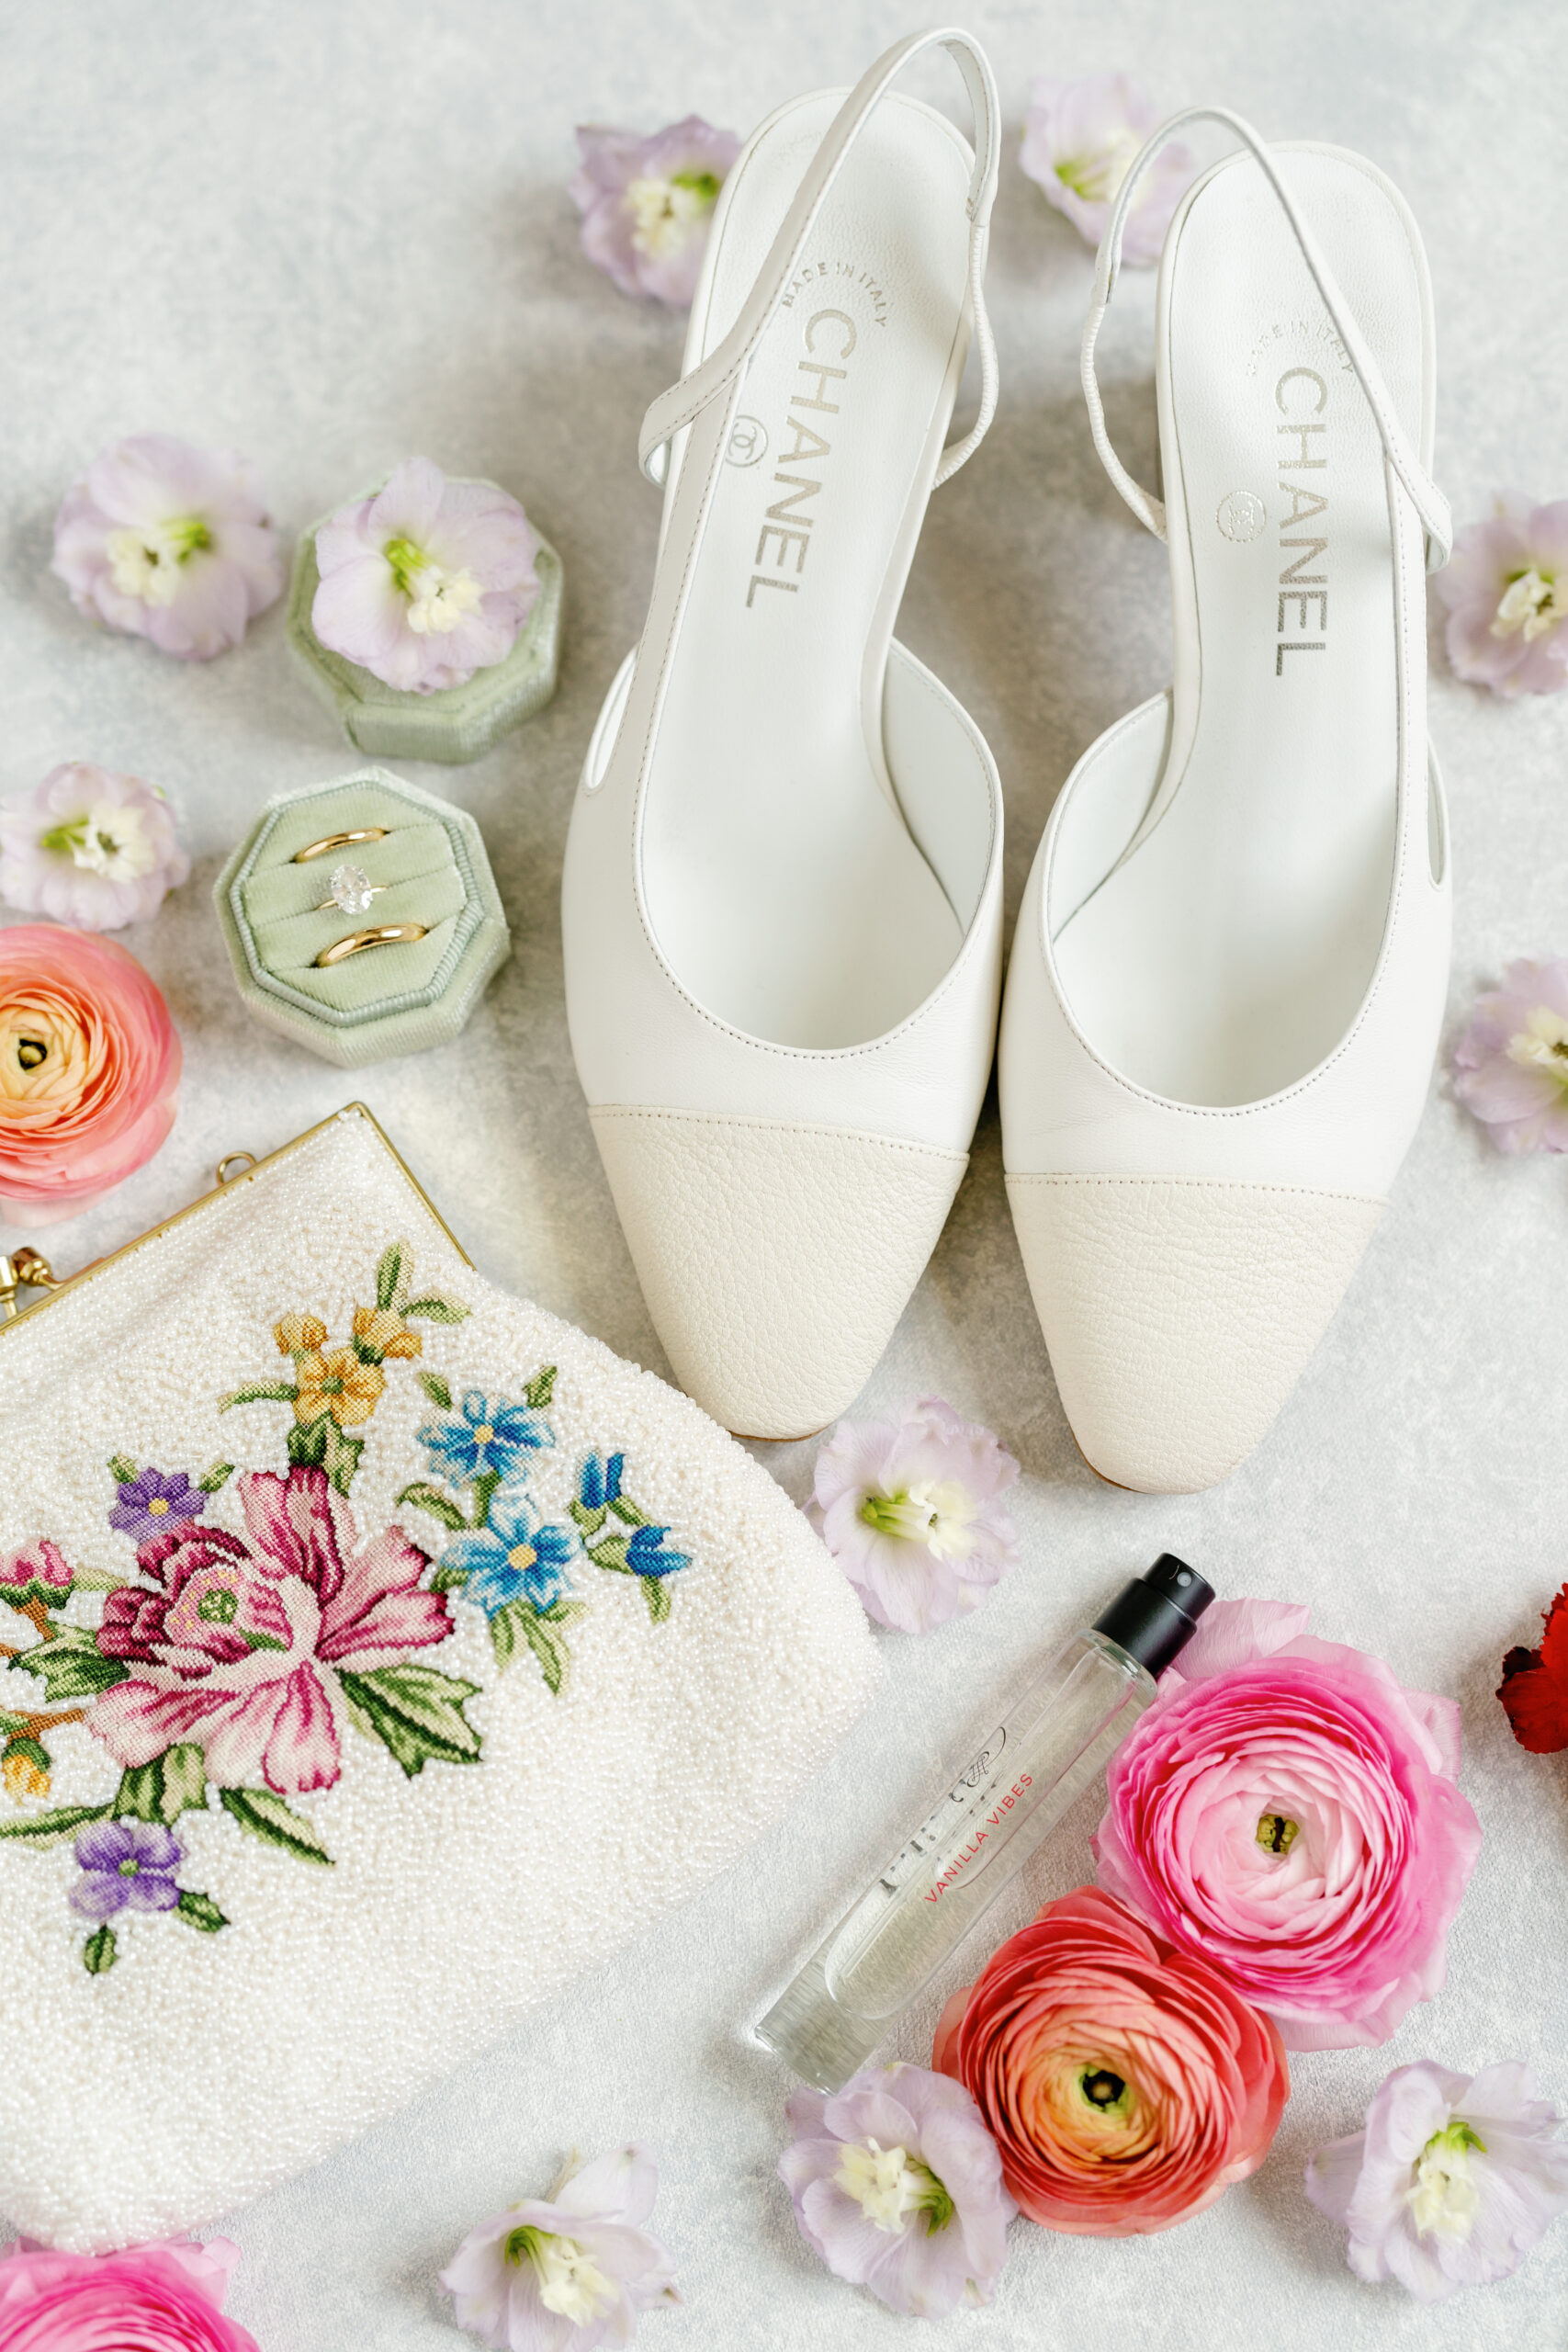 Chanel heels. Charleston wedding. Purse with flower on it.